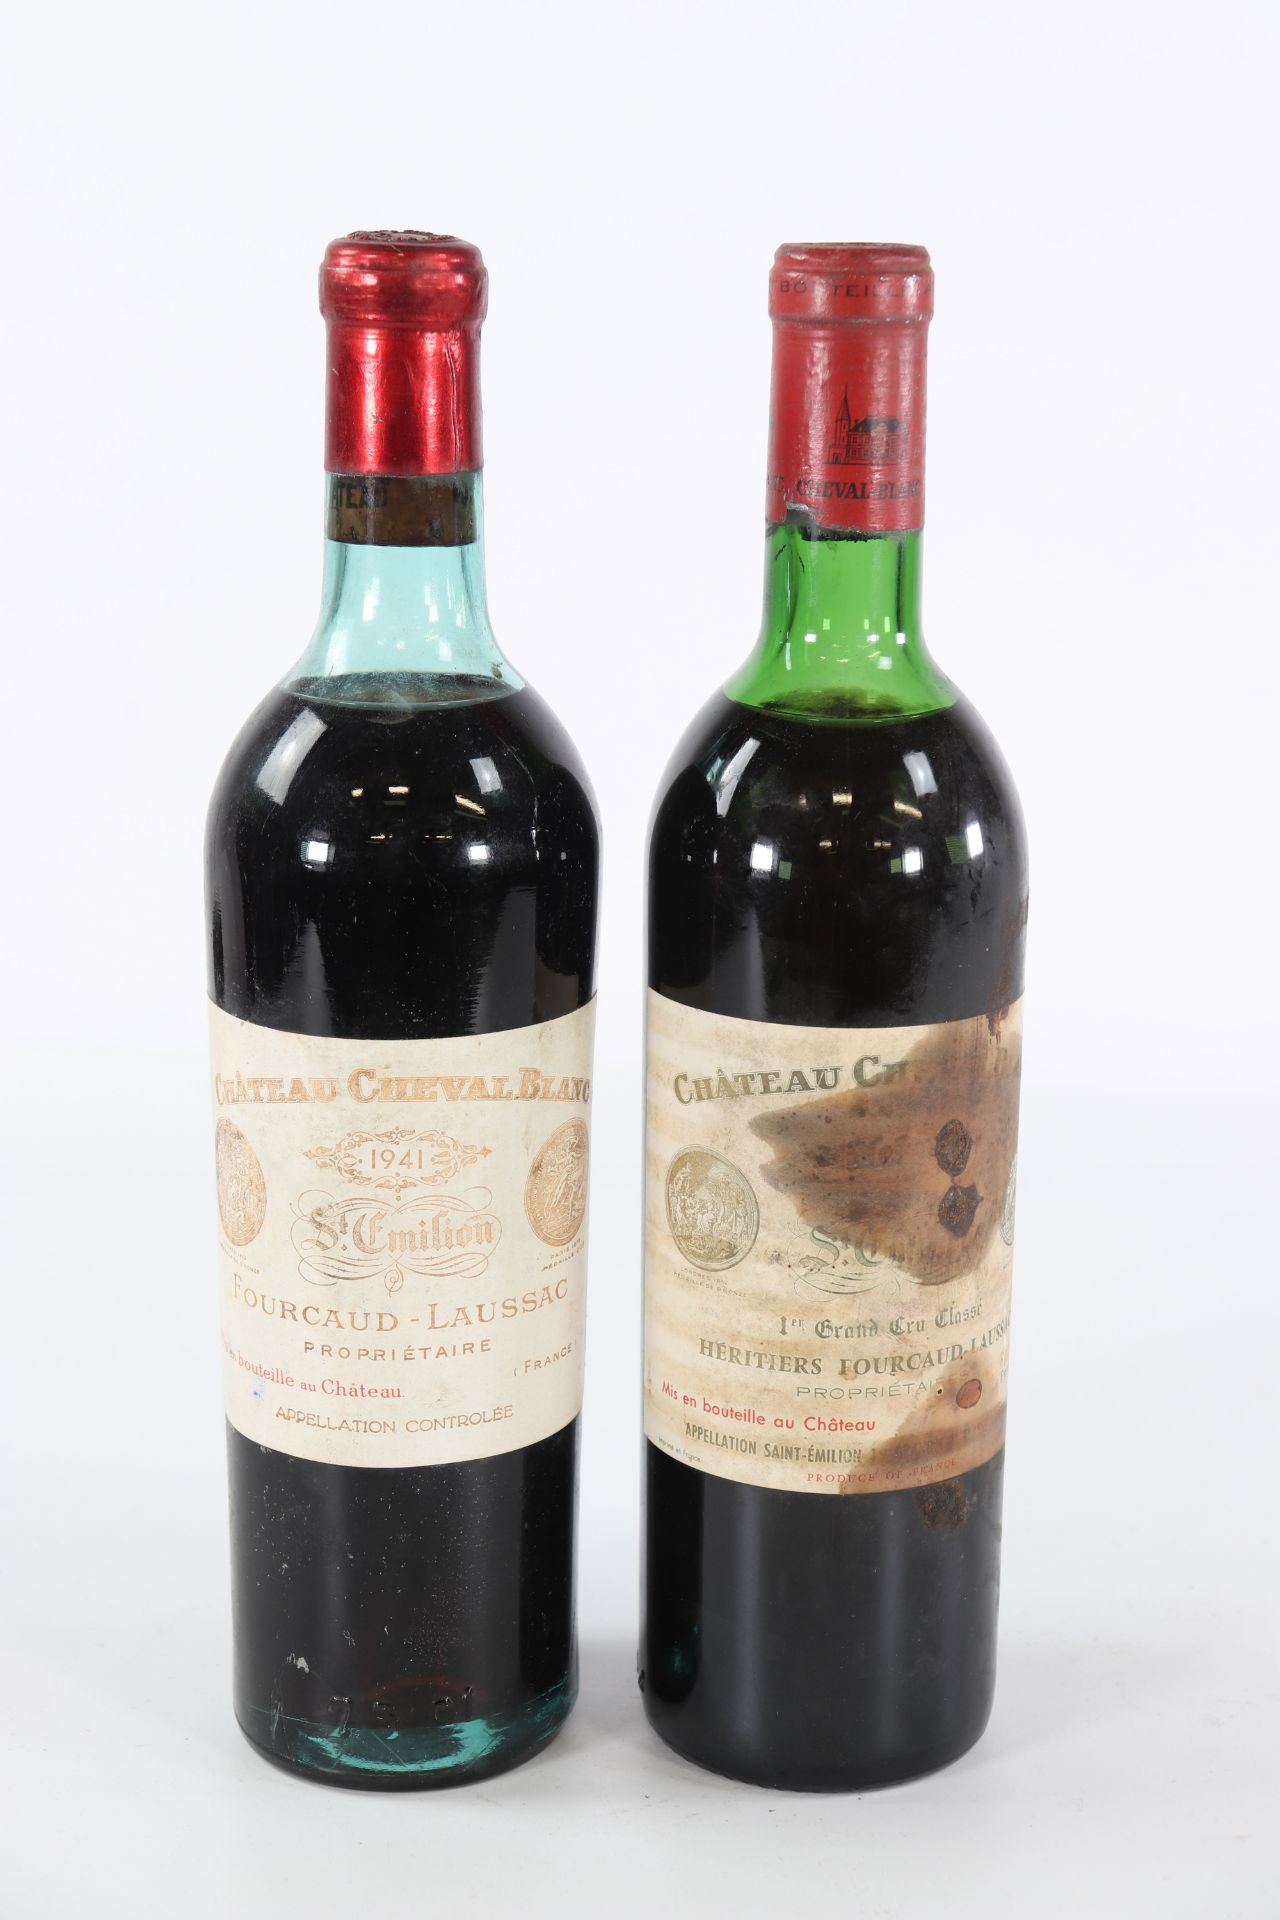 2 bottles of Chateau Cheval Blanc (Fourcaud Laussac) St Emilion Grand Cru Classe A - 1941 and year u